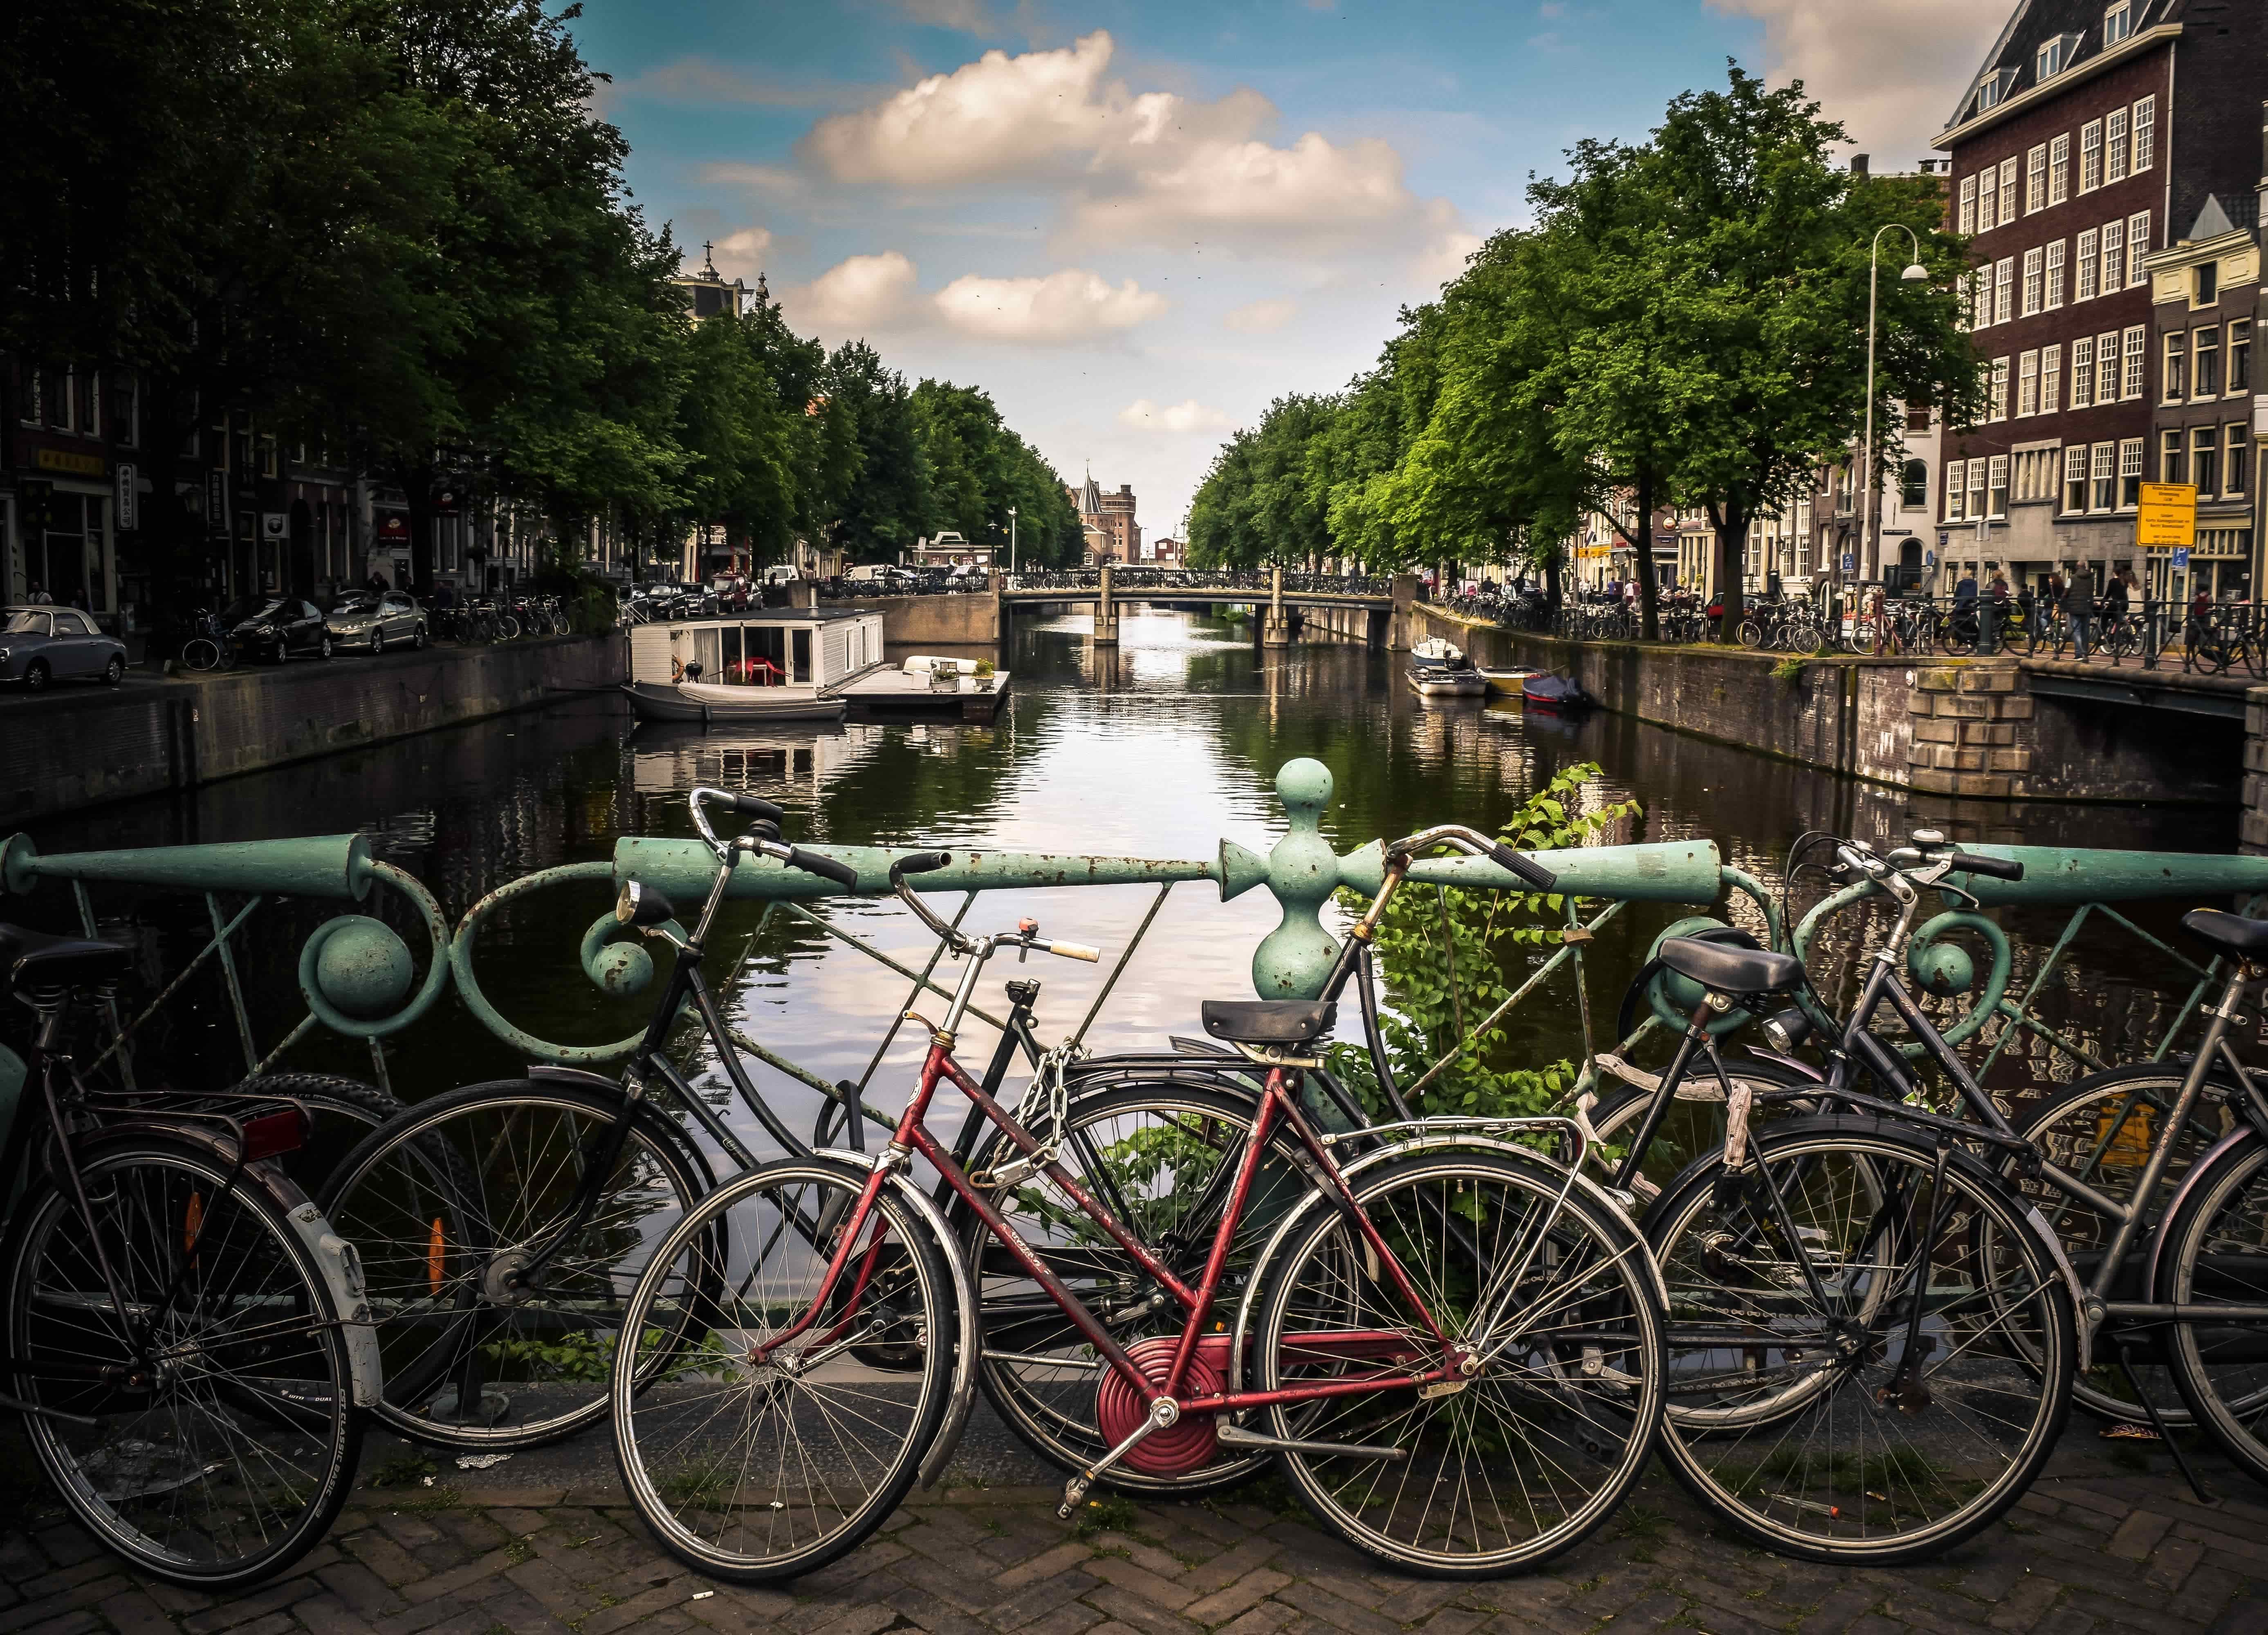 Amsterdam canal bridge and bikes